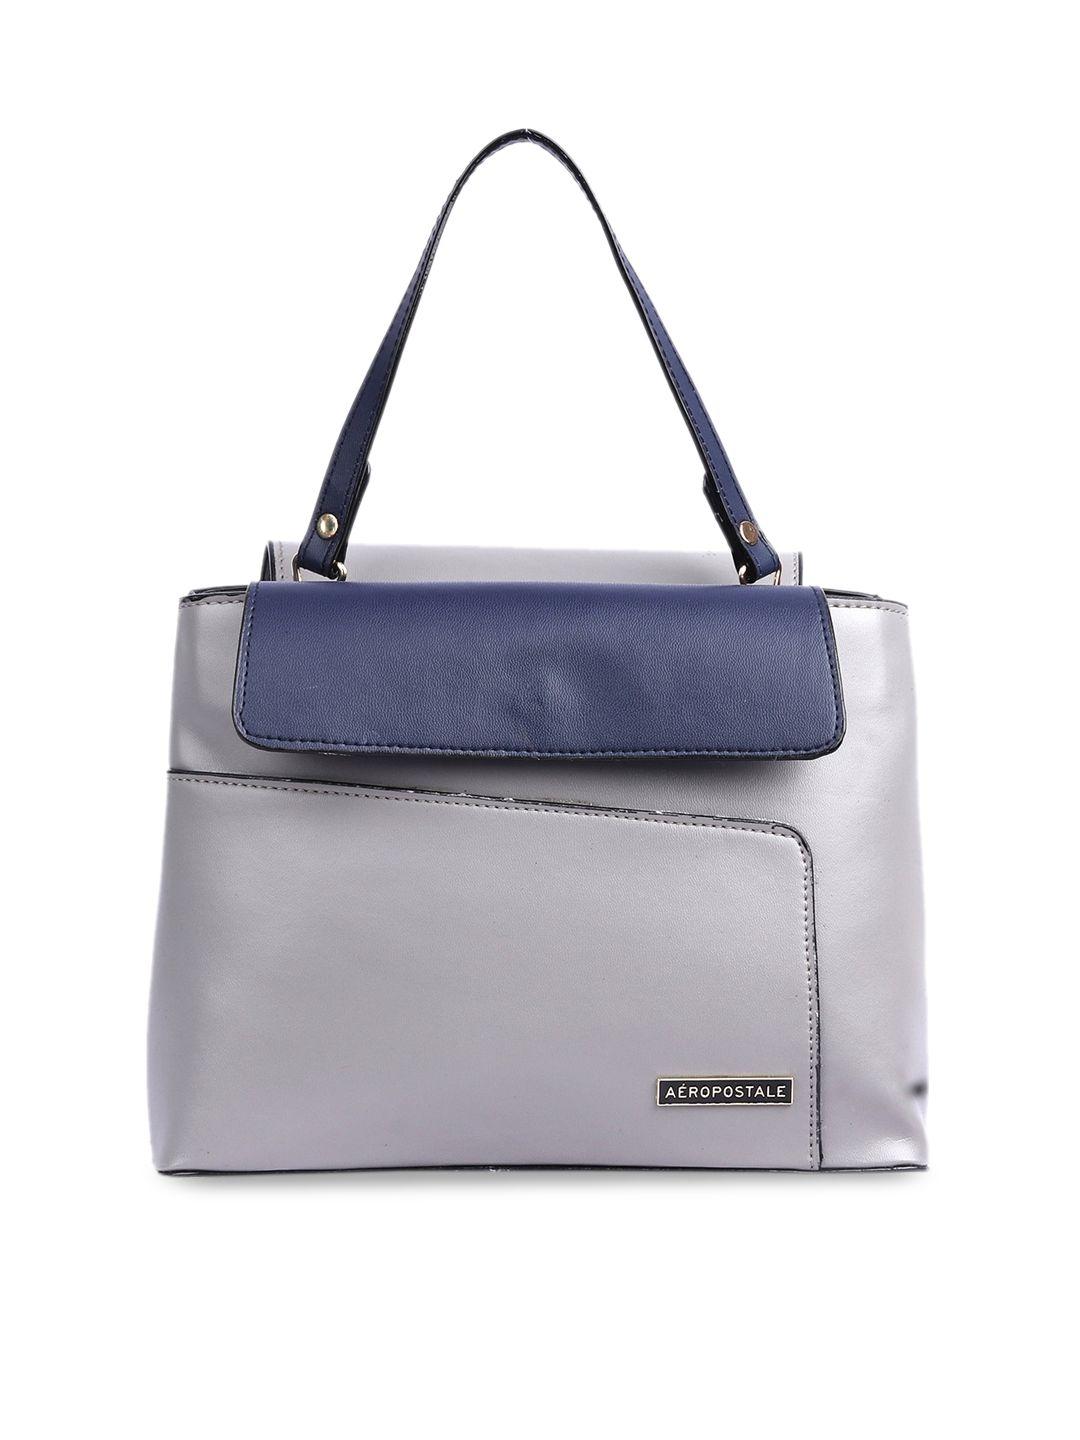 aeropostale grey & blue colourblocked structured handheld bag